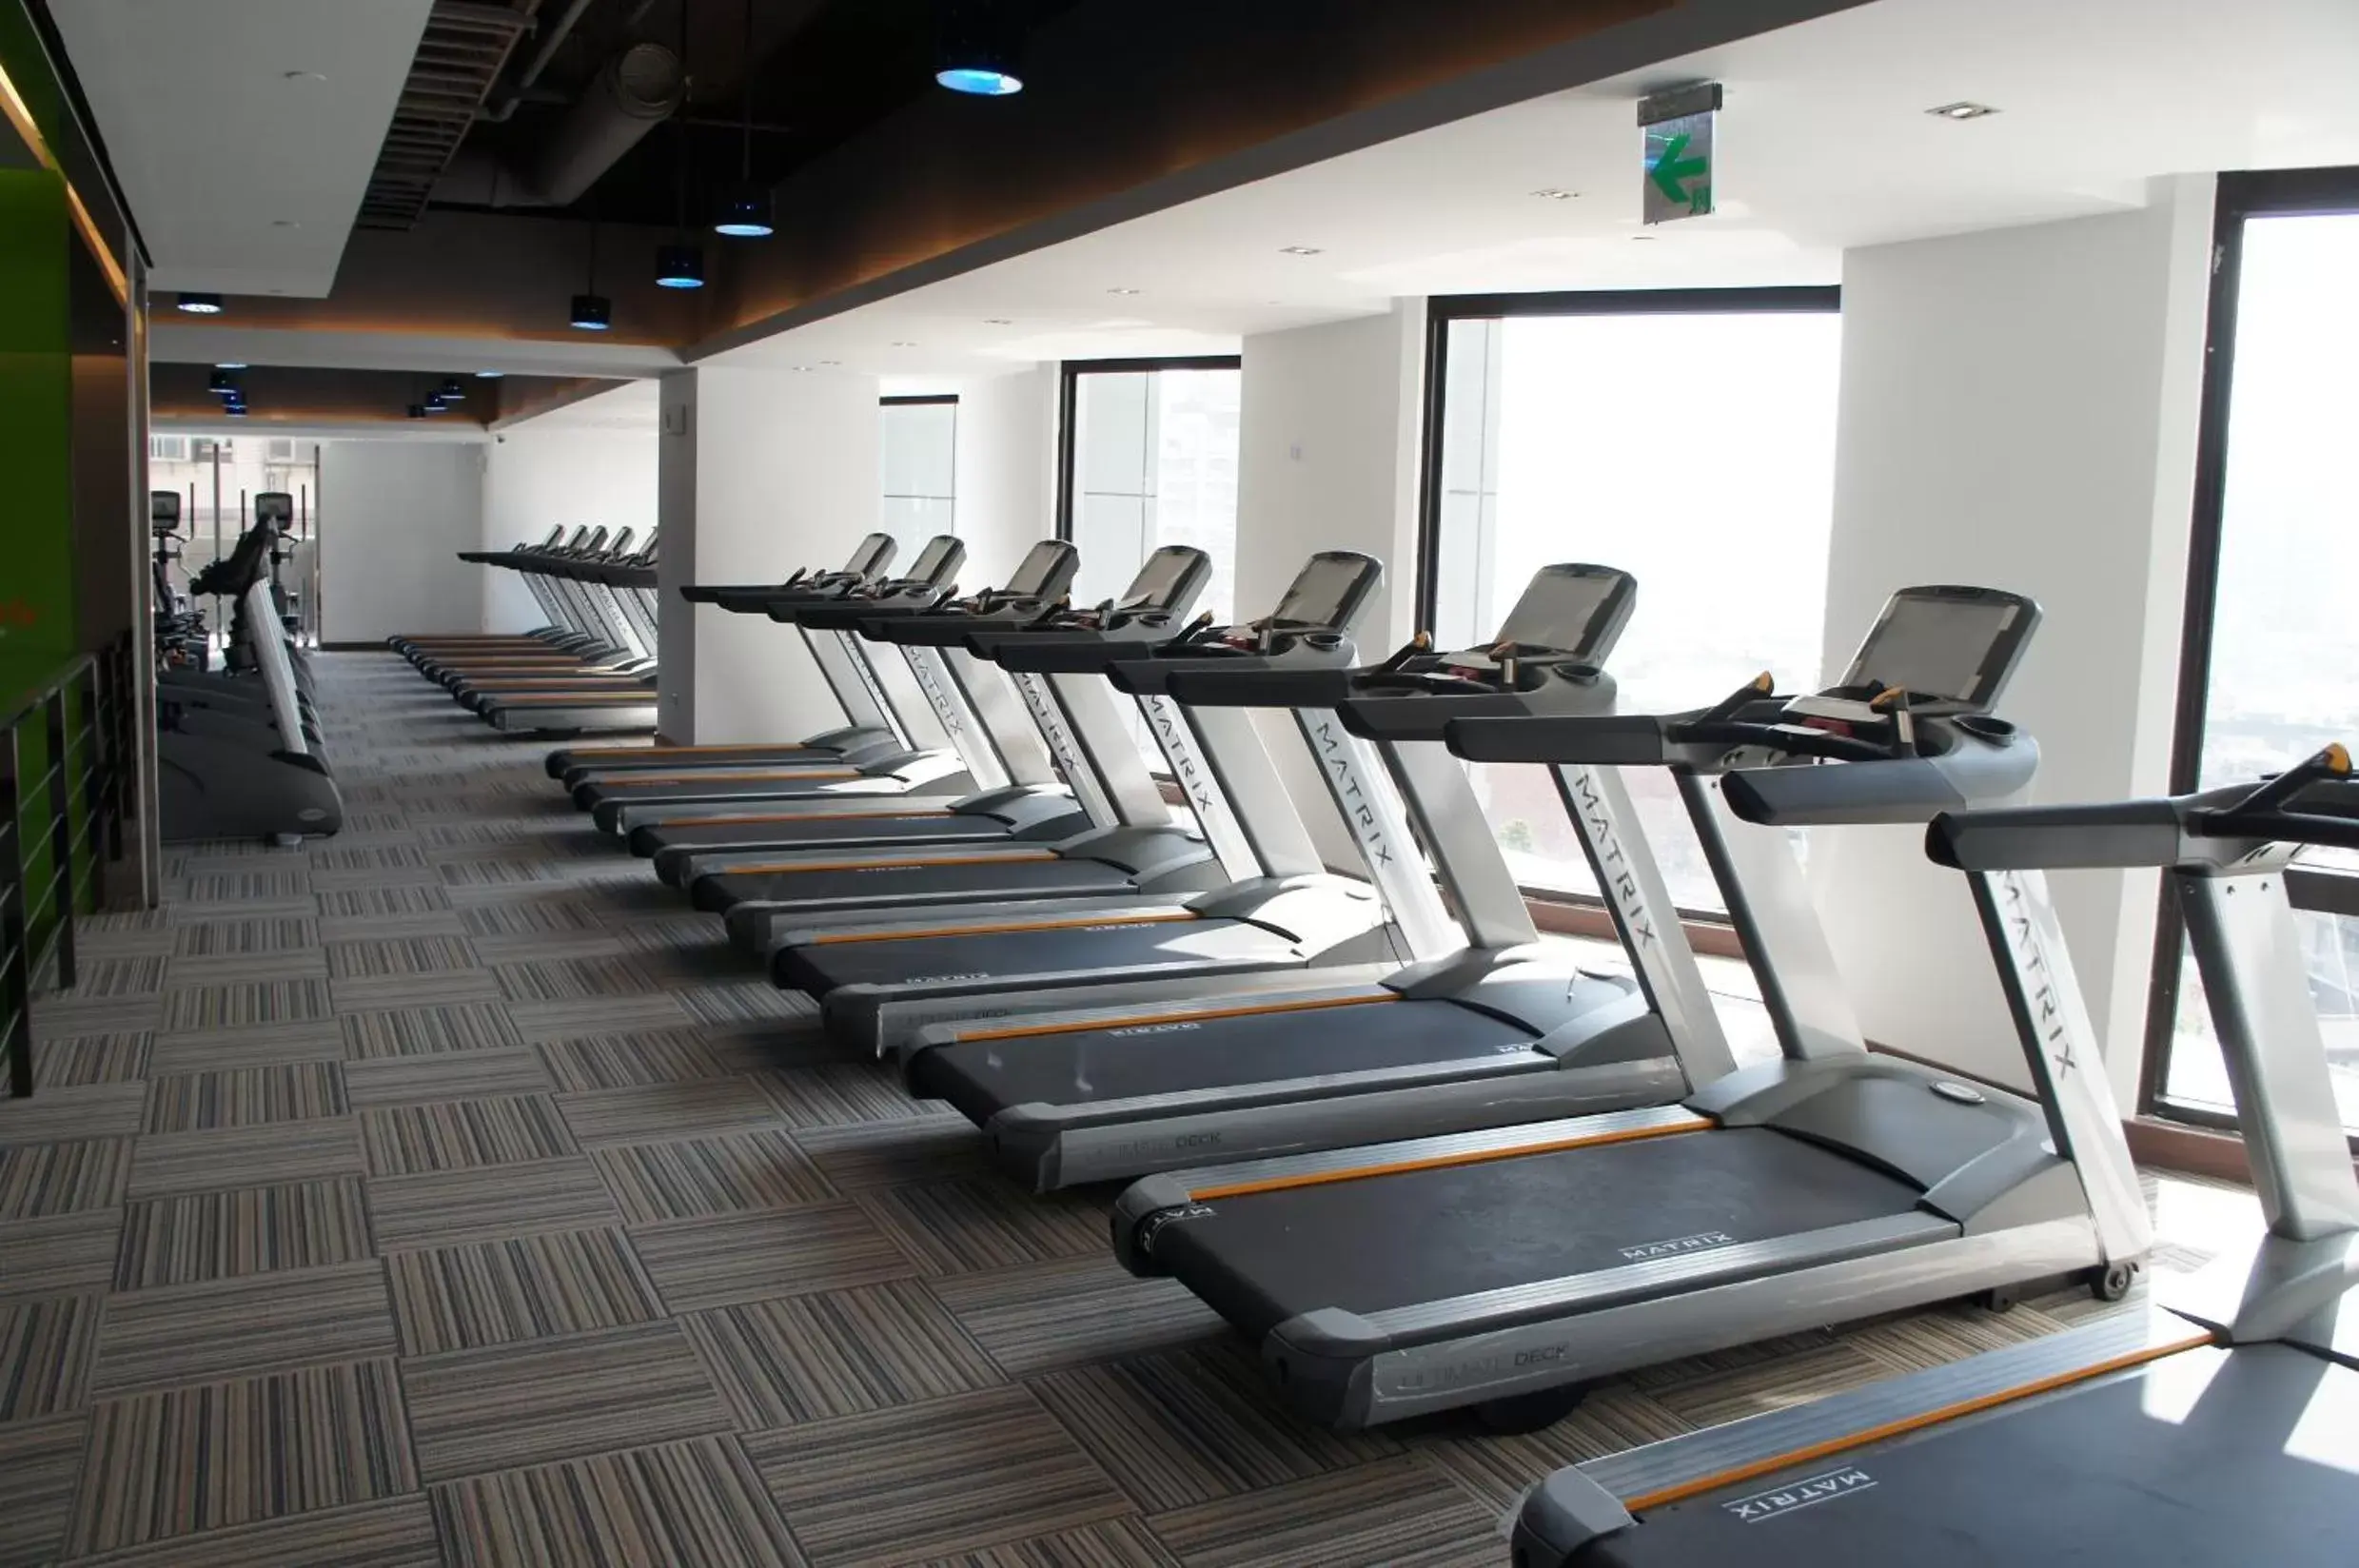 Fitness centre/facilities, Fitness Center/Facilities in Park City Hotel - Luzhou Taipei